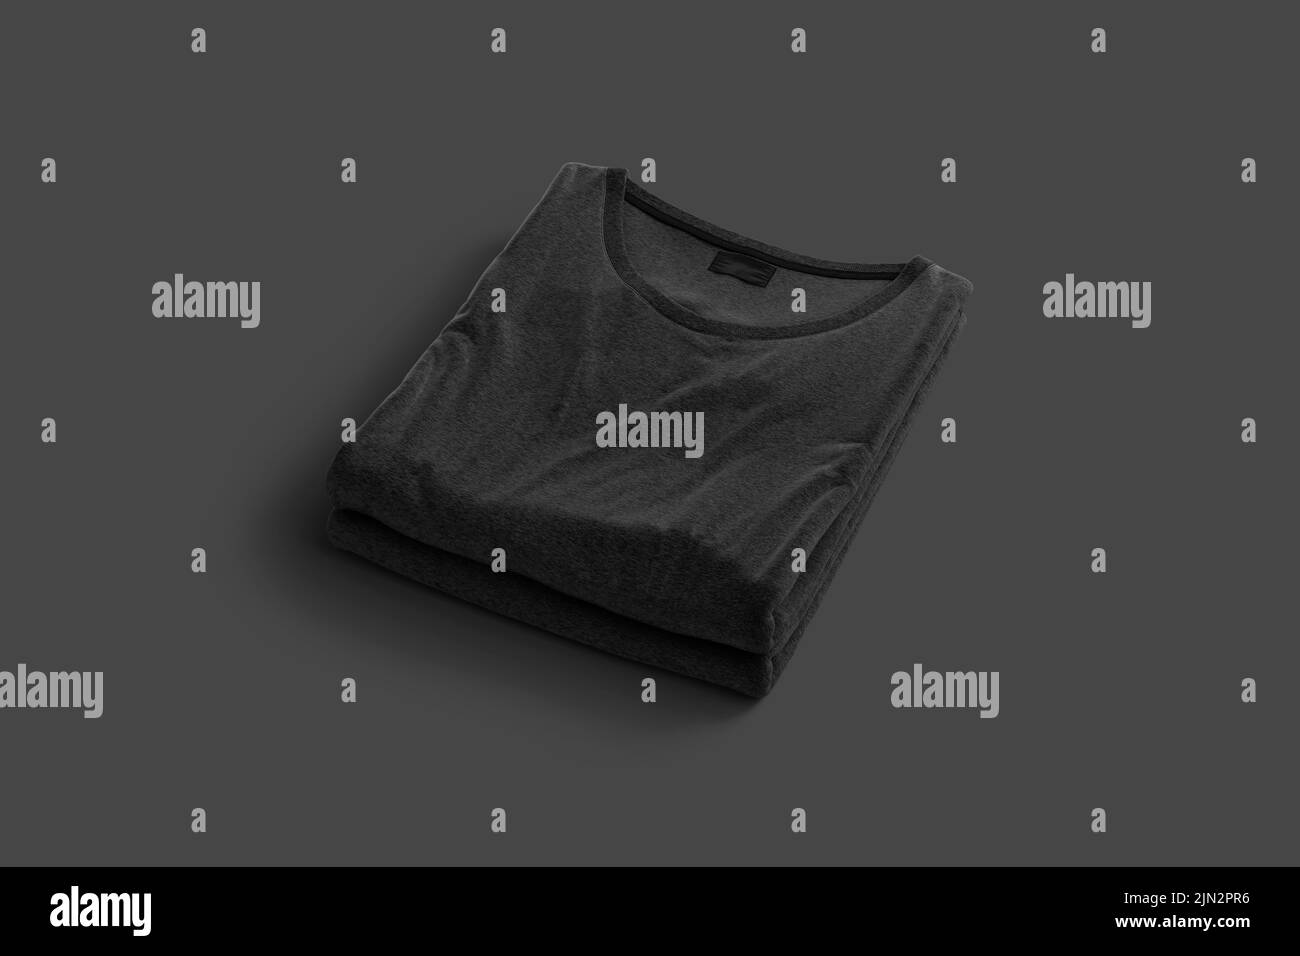 Negro en blanco doblado cuadrado camiseta pila de mockup, fondo oscuro Foto de stock